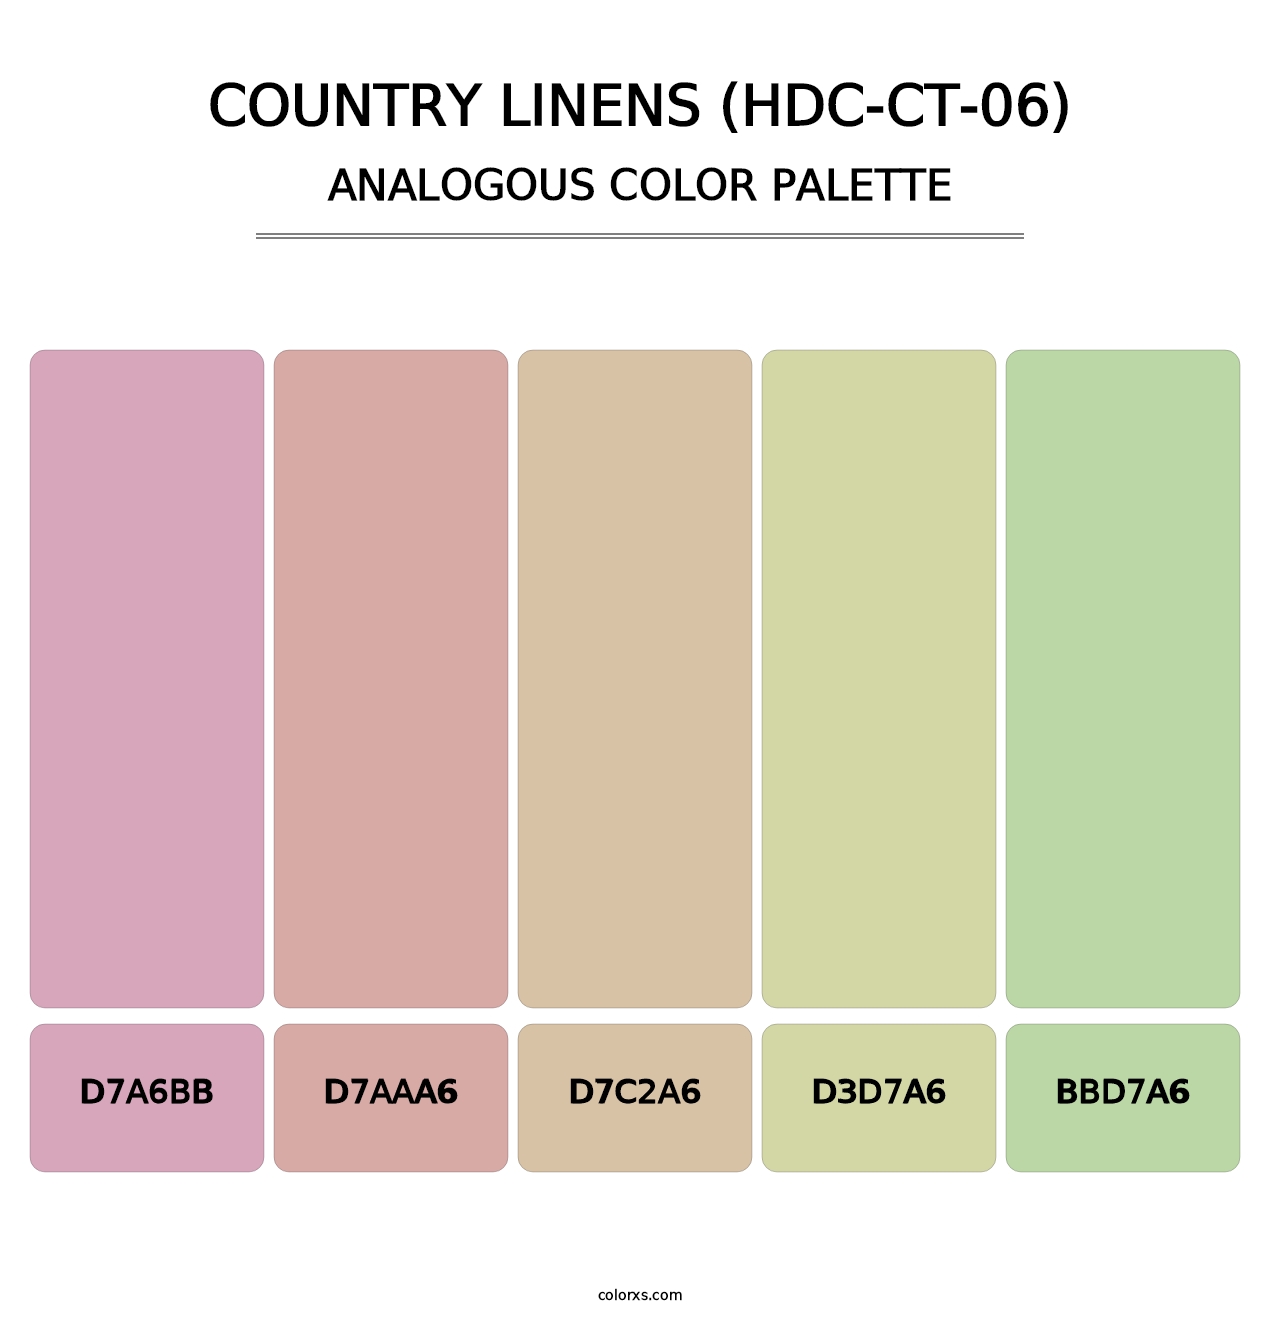 Country Linens (HDC-CT-06) - Analogous Color Palette